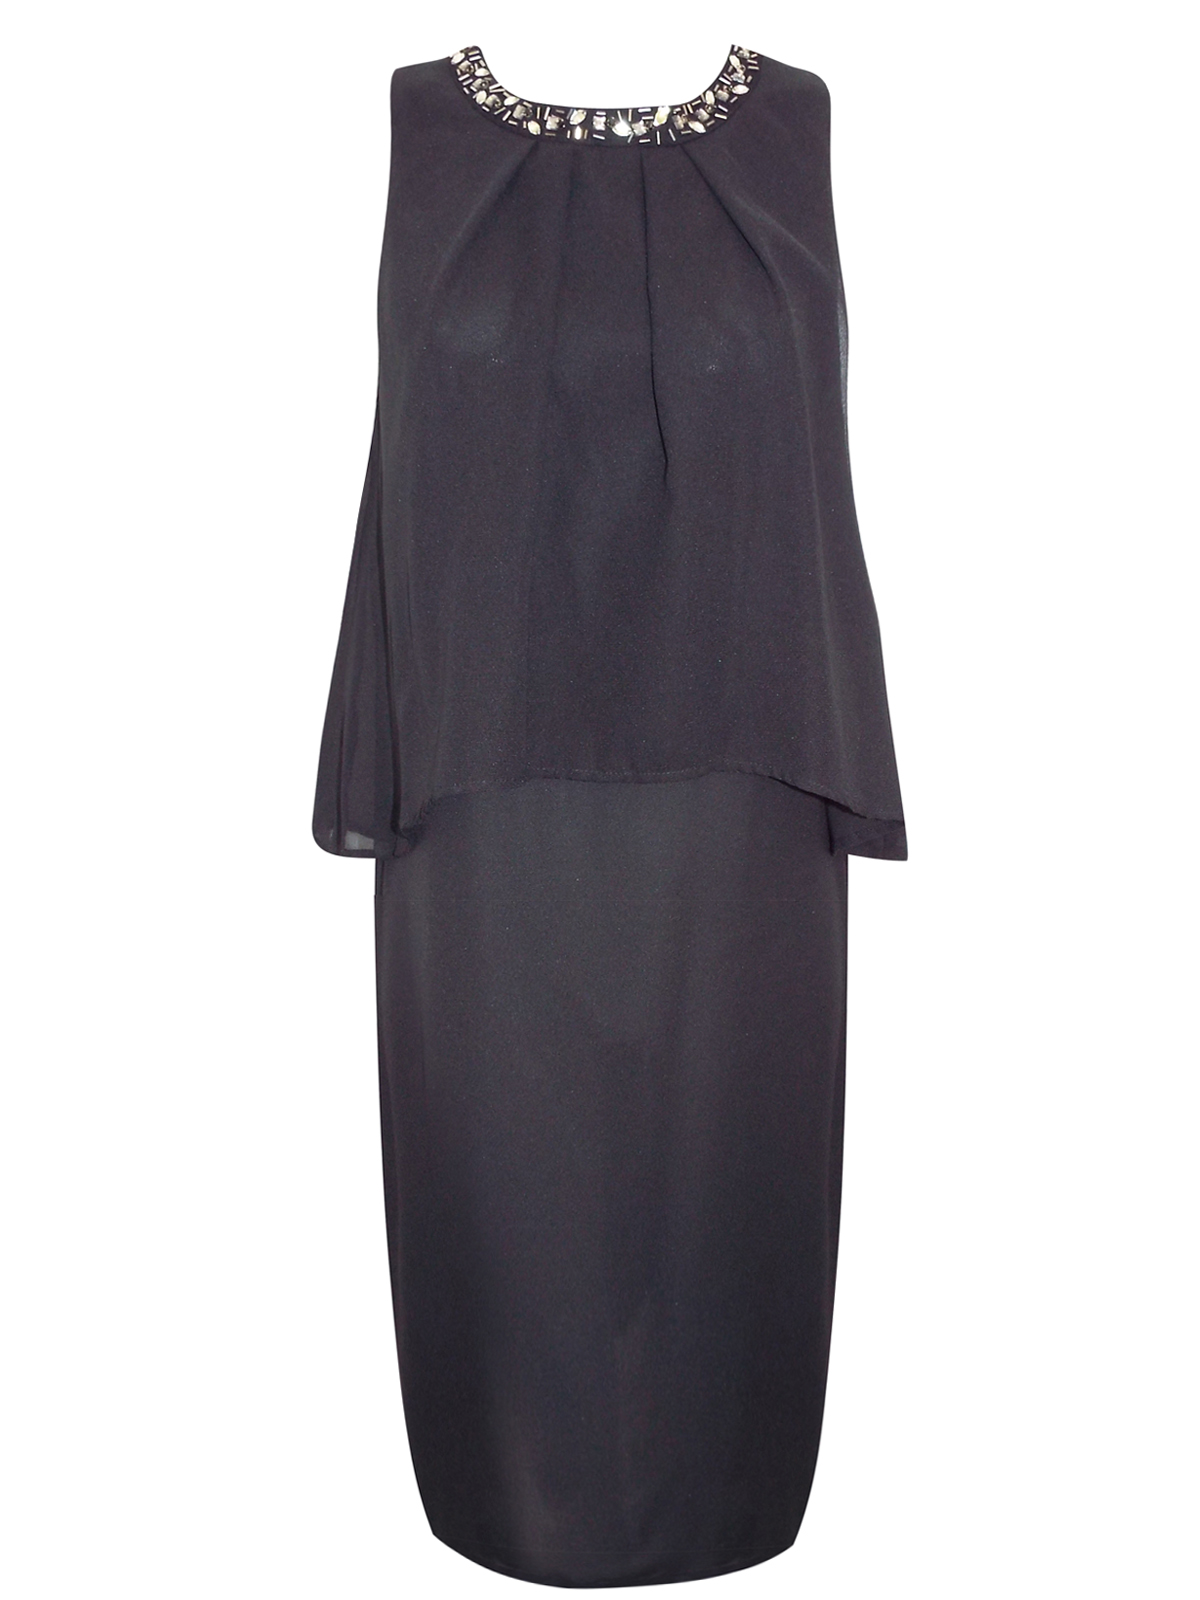 Zuri - - Zuri BLACK Jewel Embellished Overlayer Shift Dress - Size 10 to 20